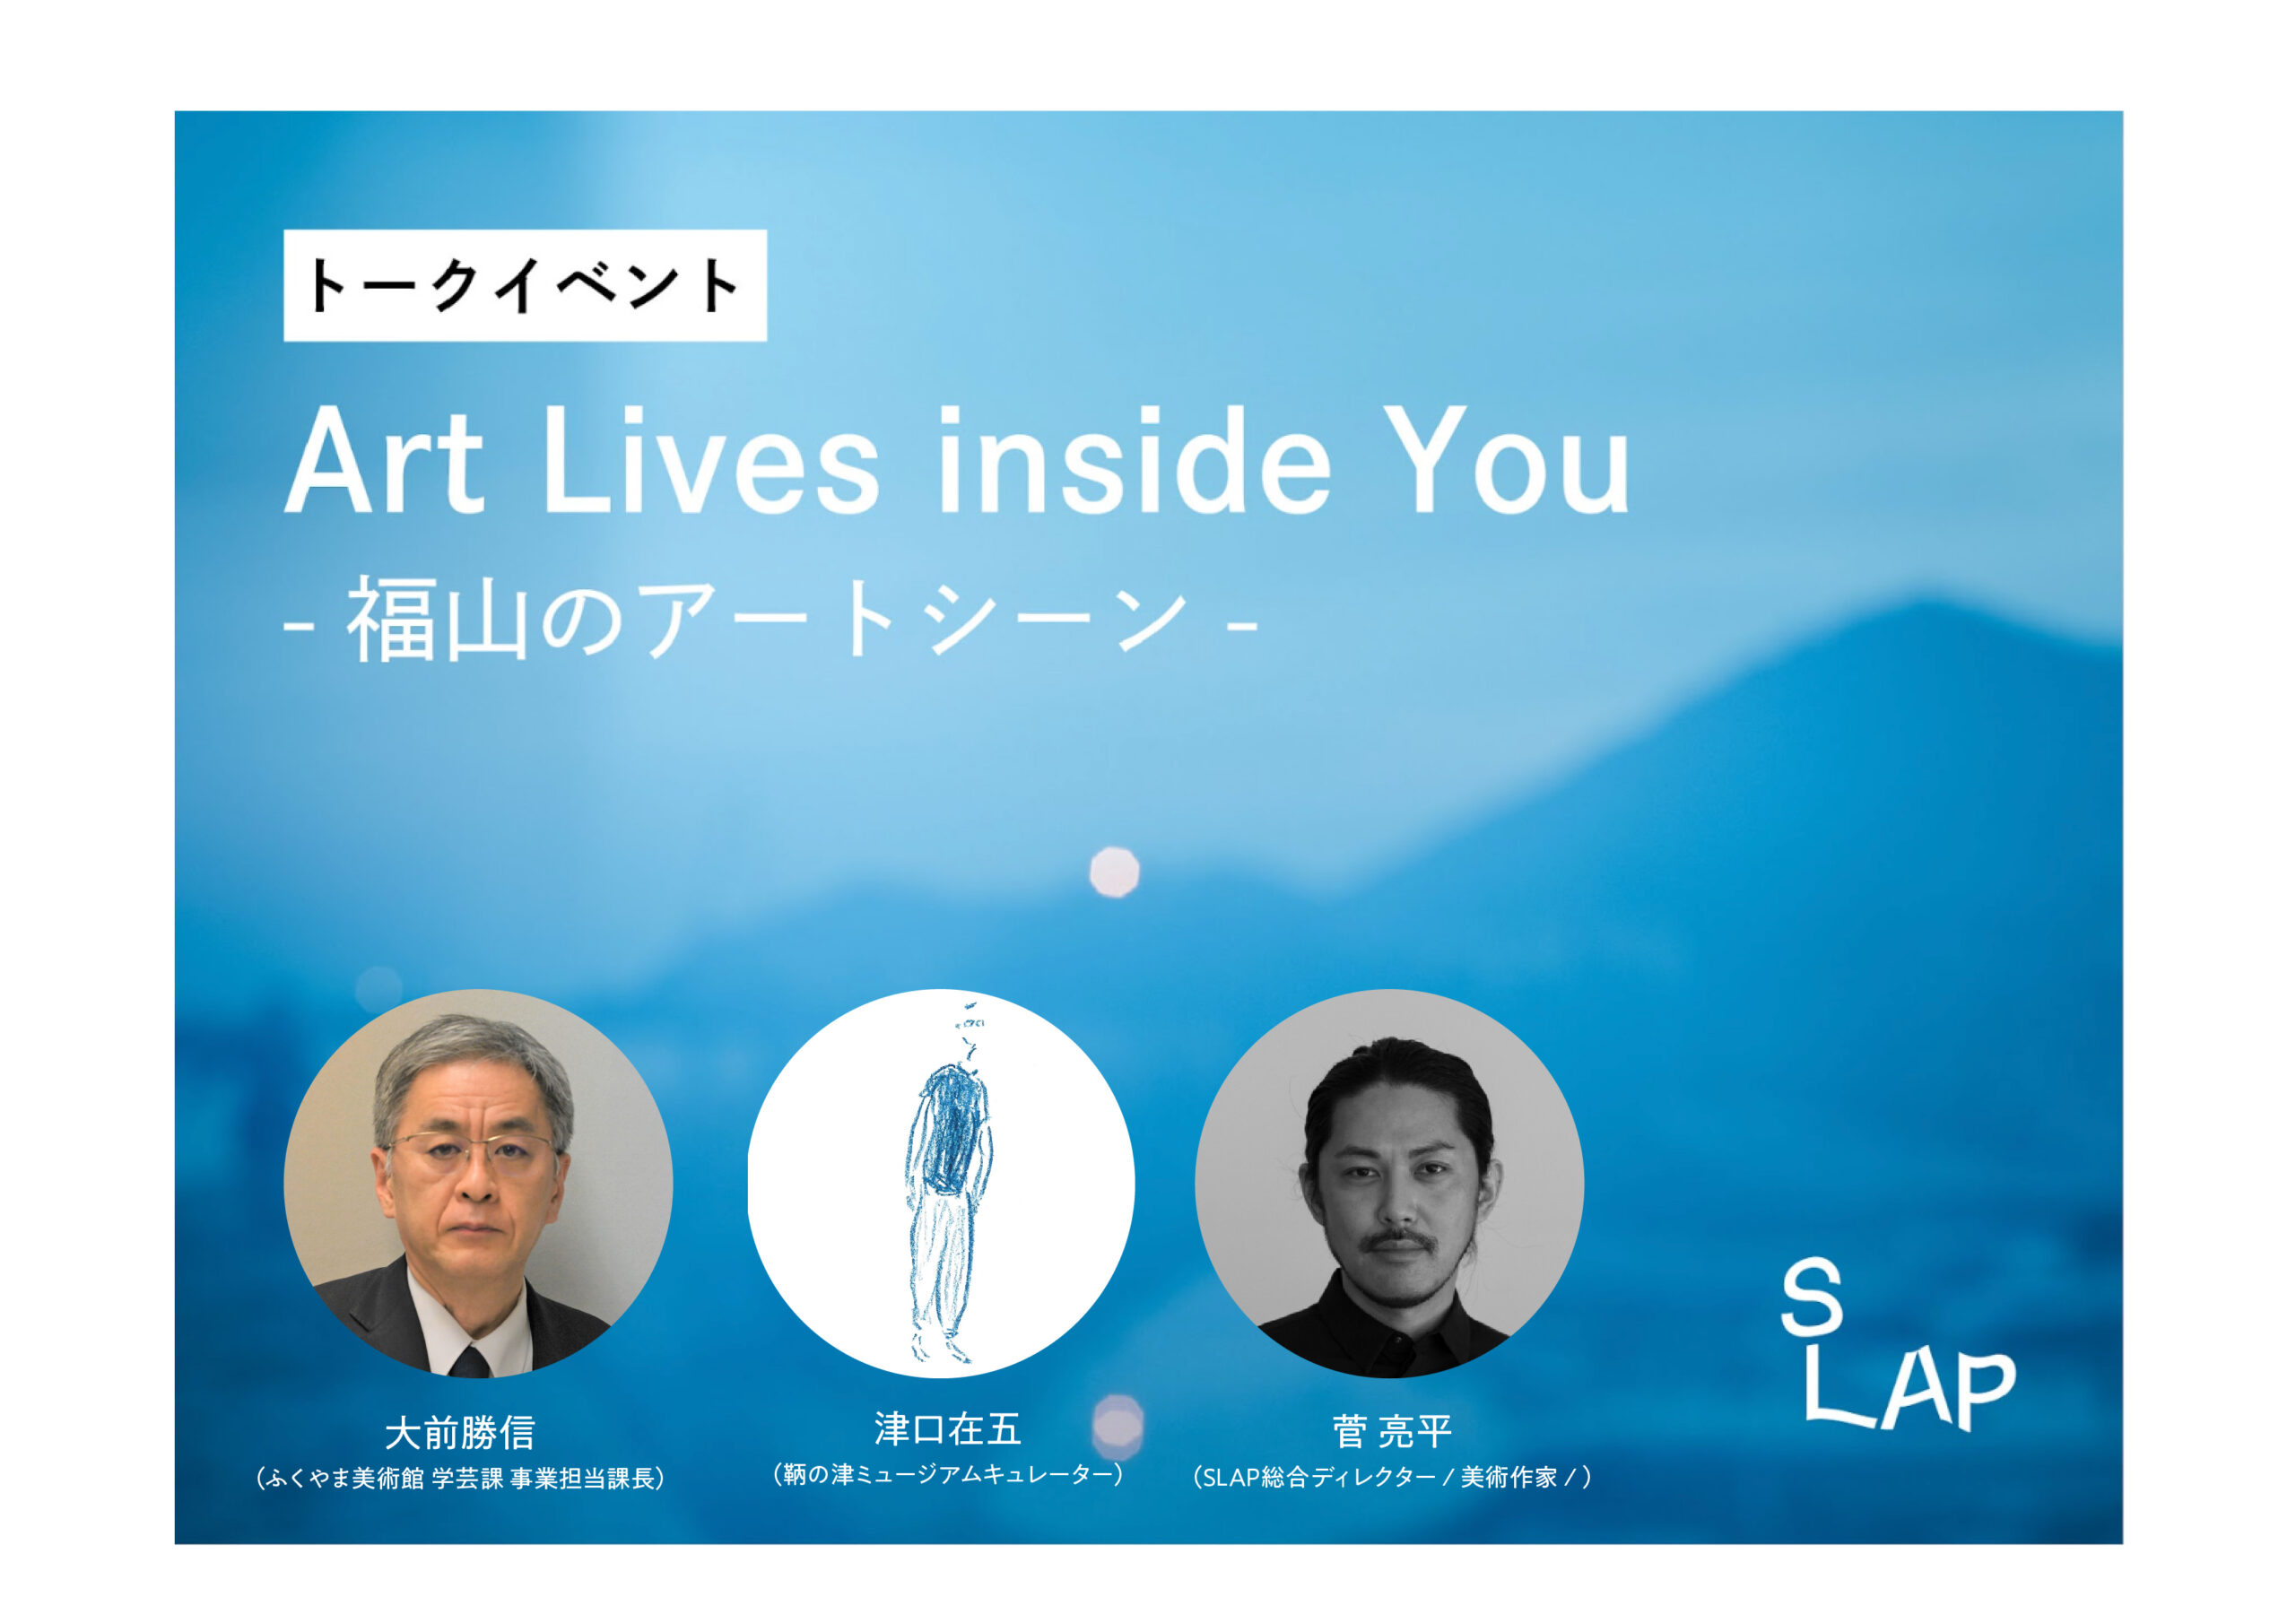 SLAP主催トークイベント vol.2 「Art Lives inside You ー福山のアートシーンー」を開催します。